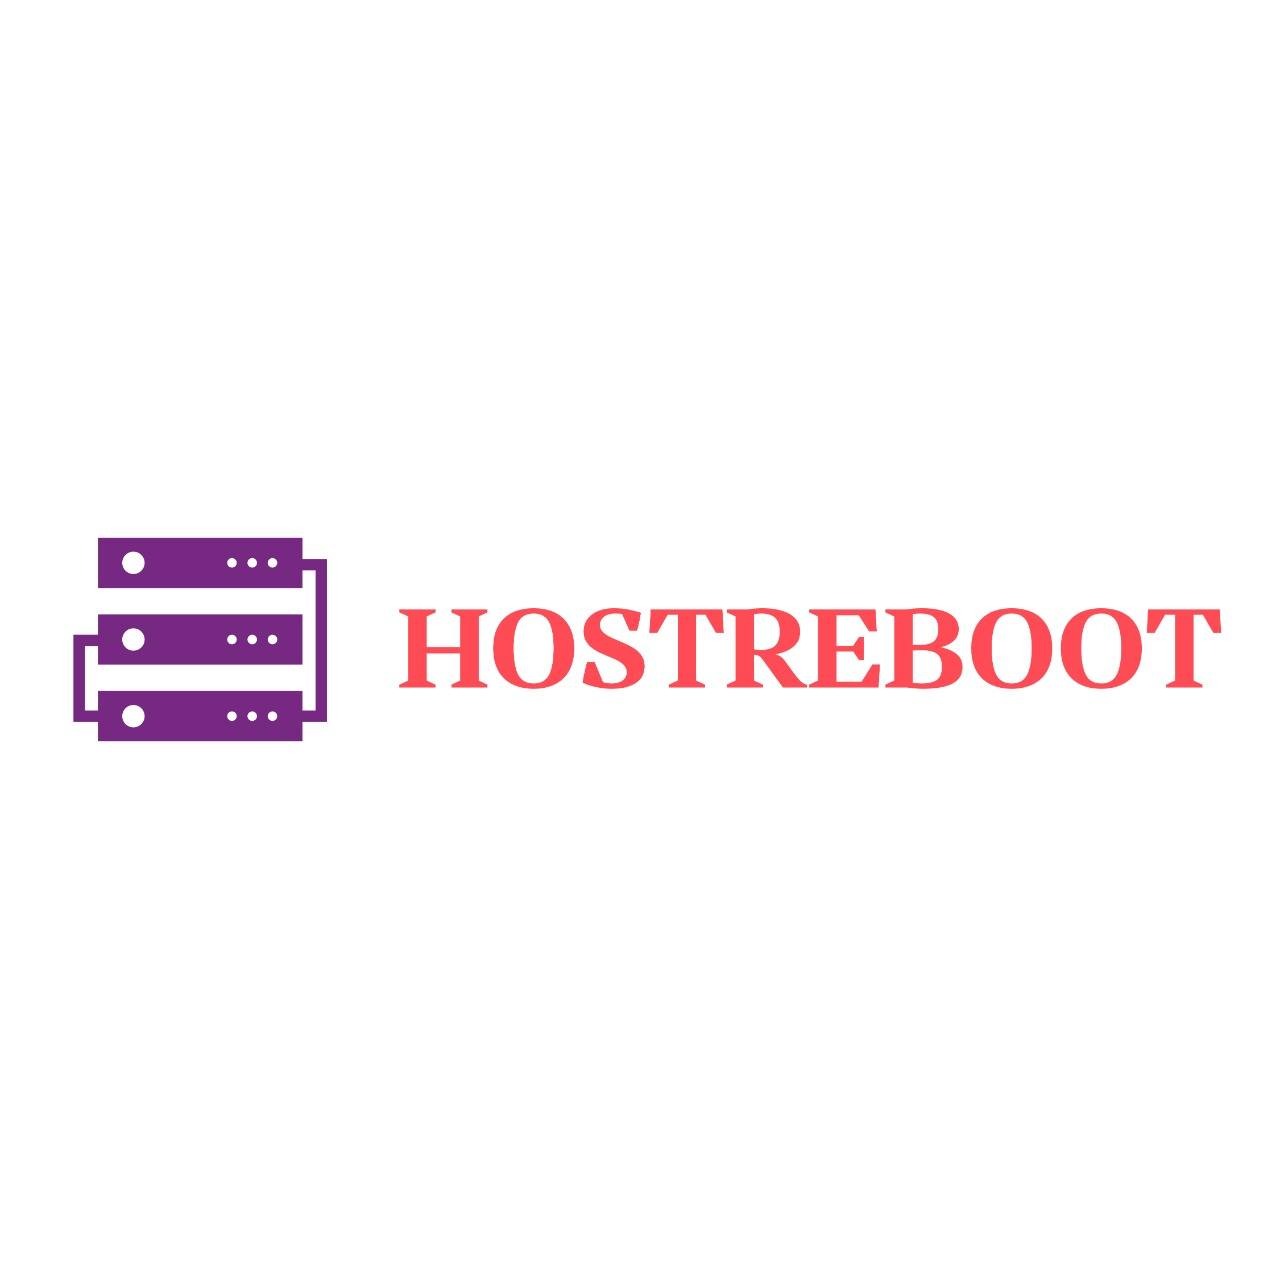 Hostreboot